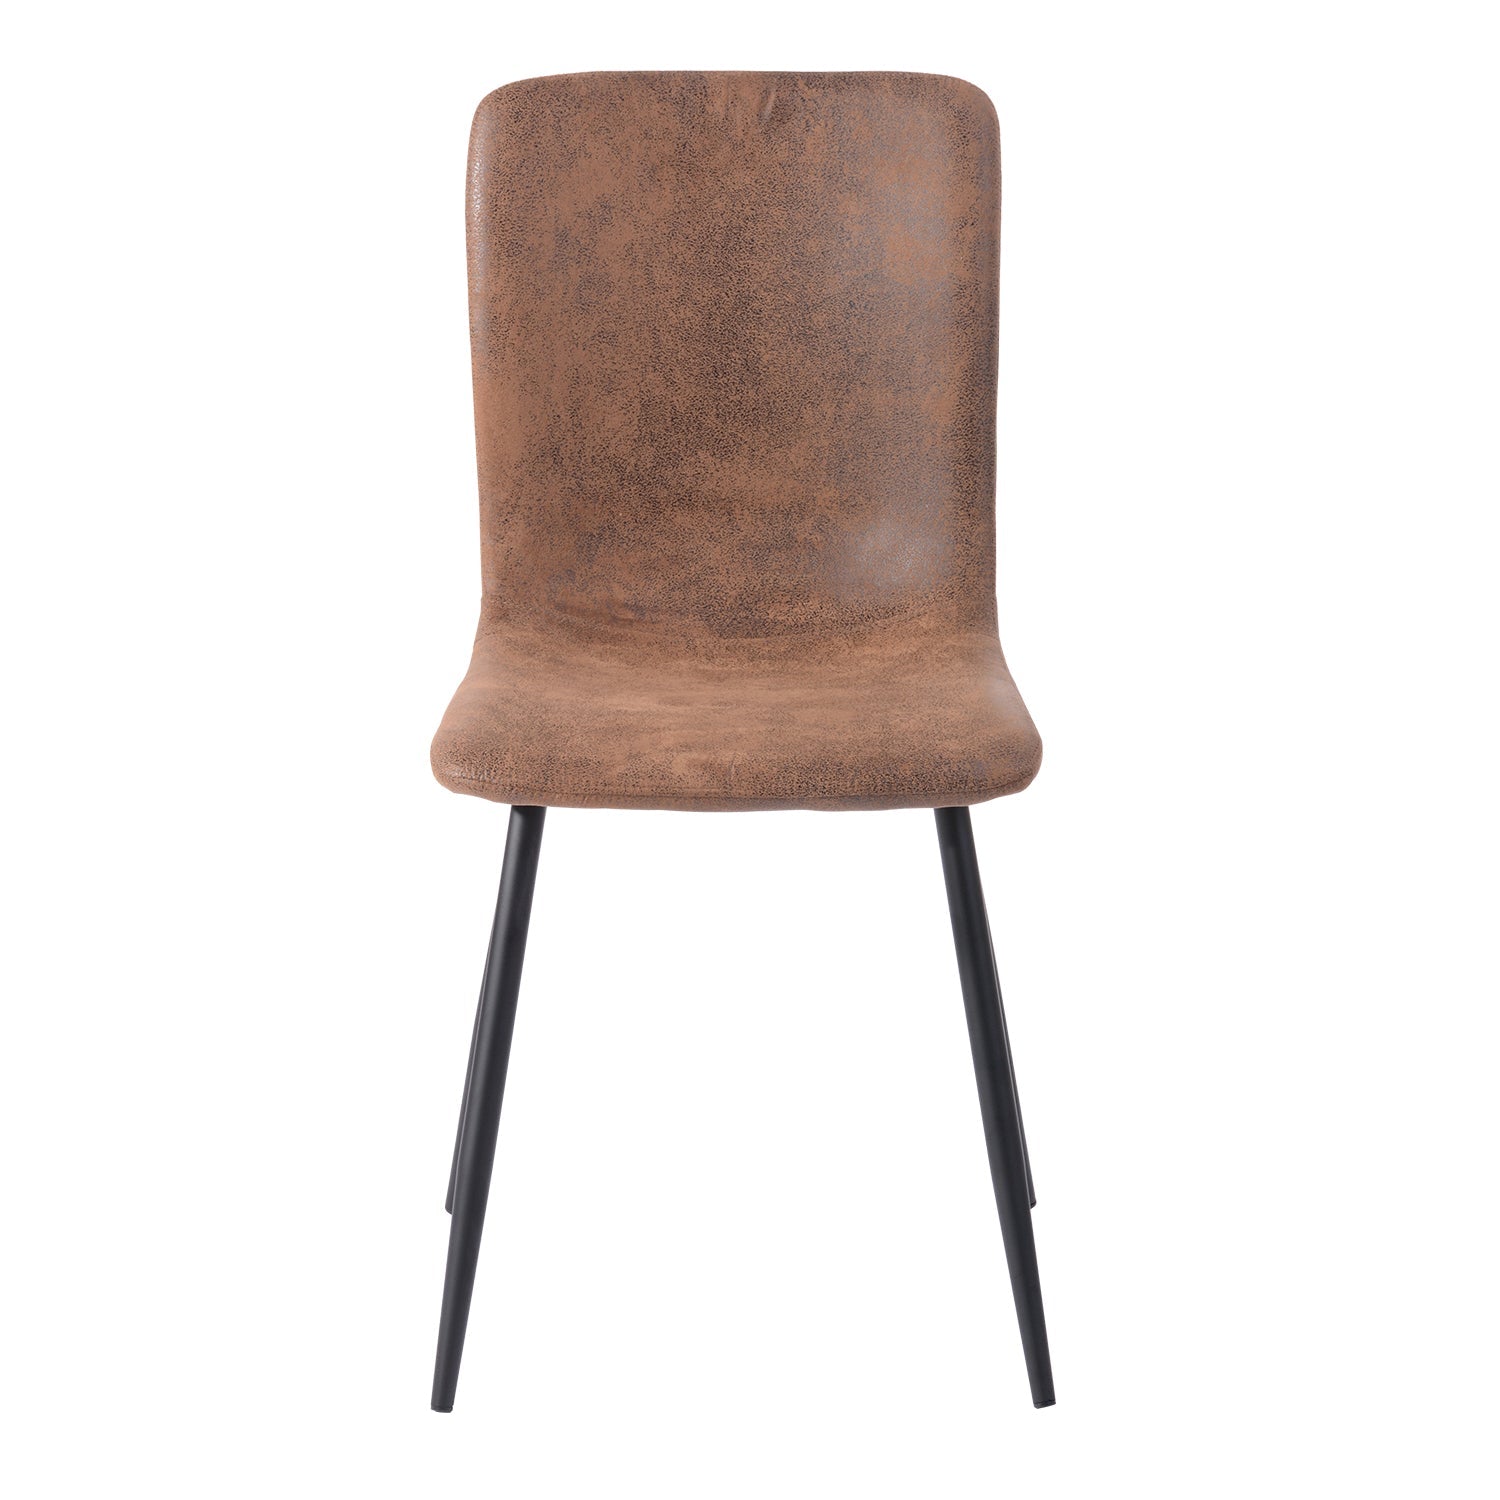 SCARGILL SUEDE dining chair with metal legs - Brown